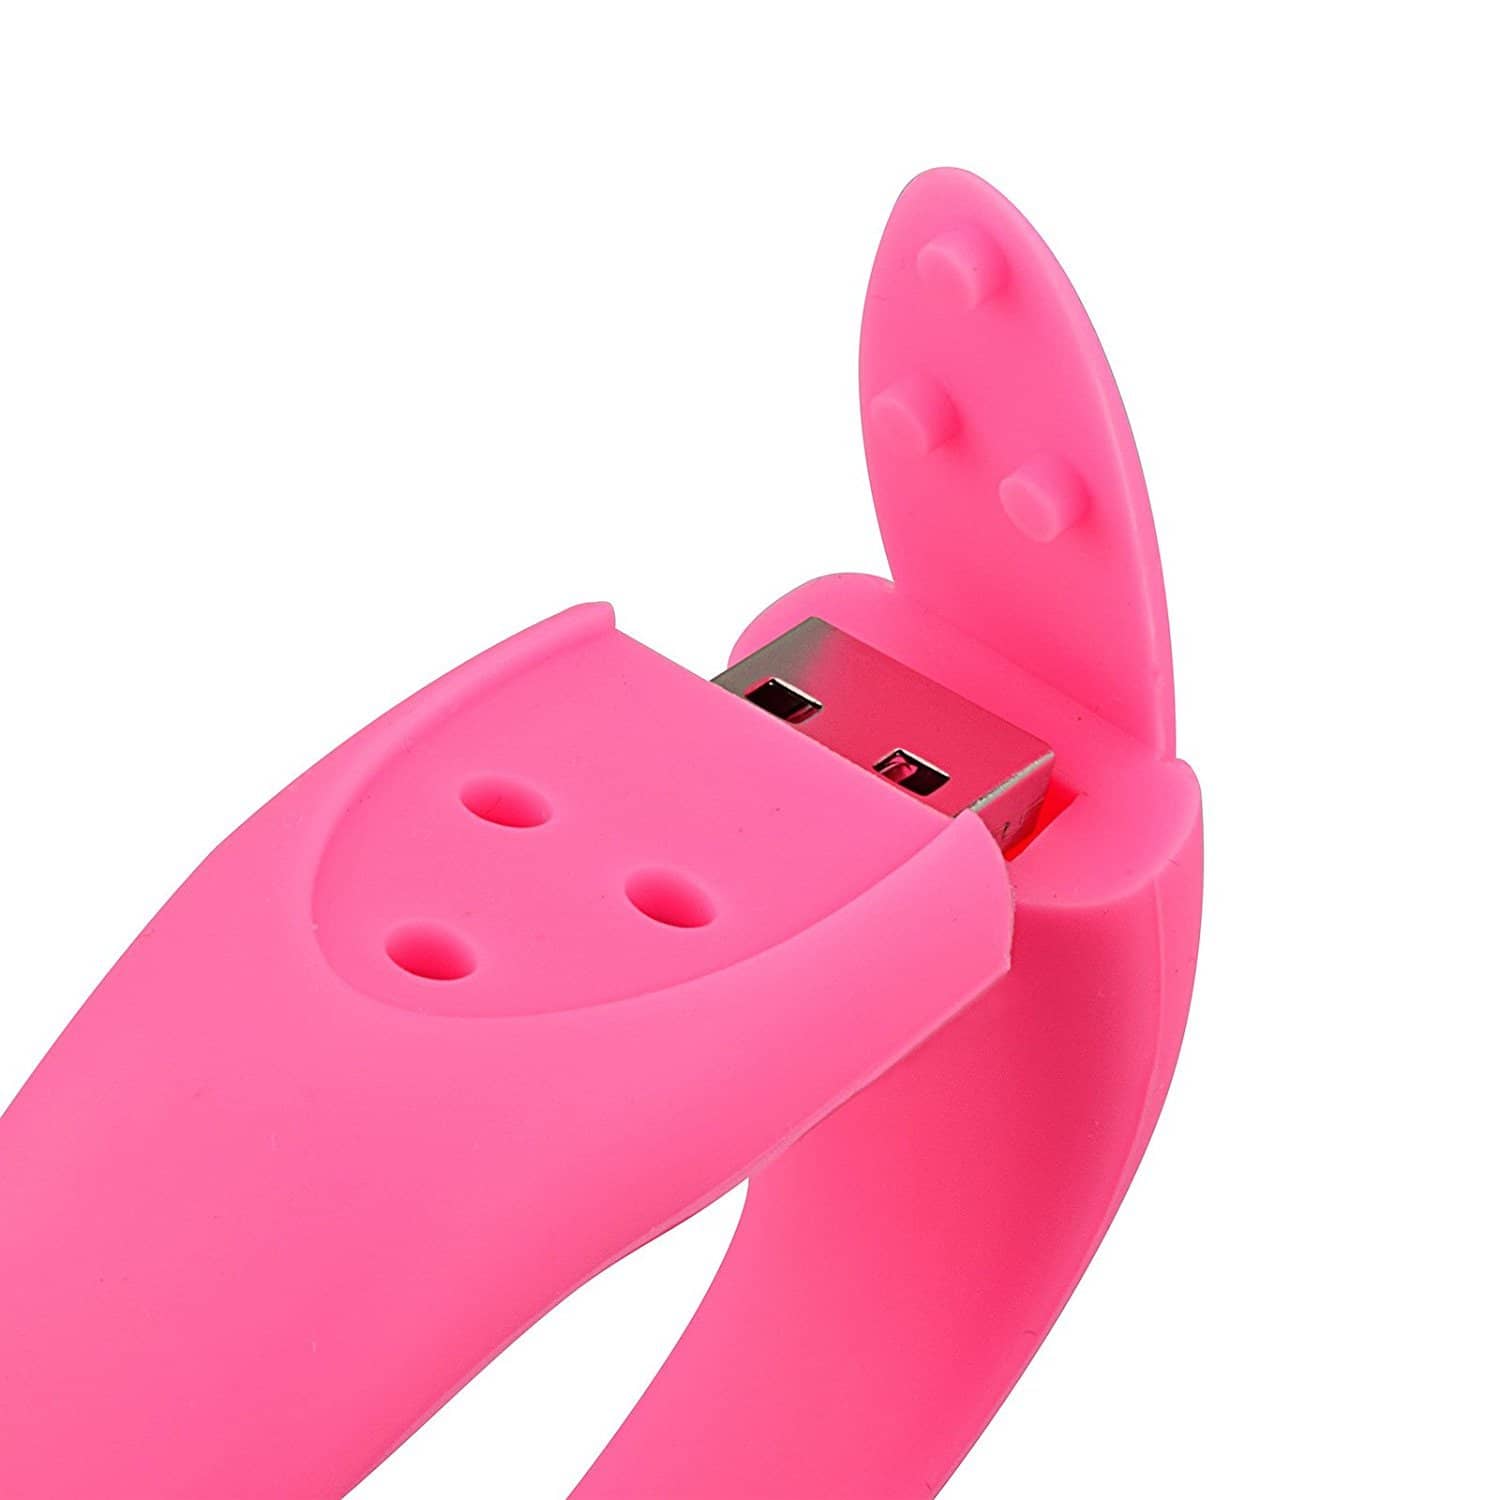 KOOTION 16GB Wristband USB 2.0 Flash Drive - Pink